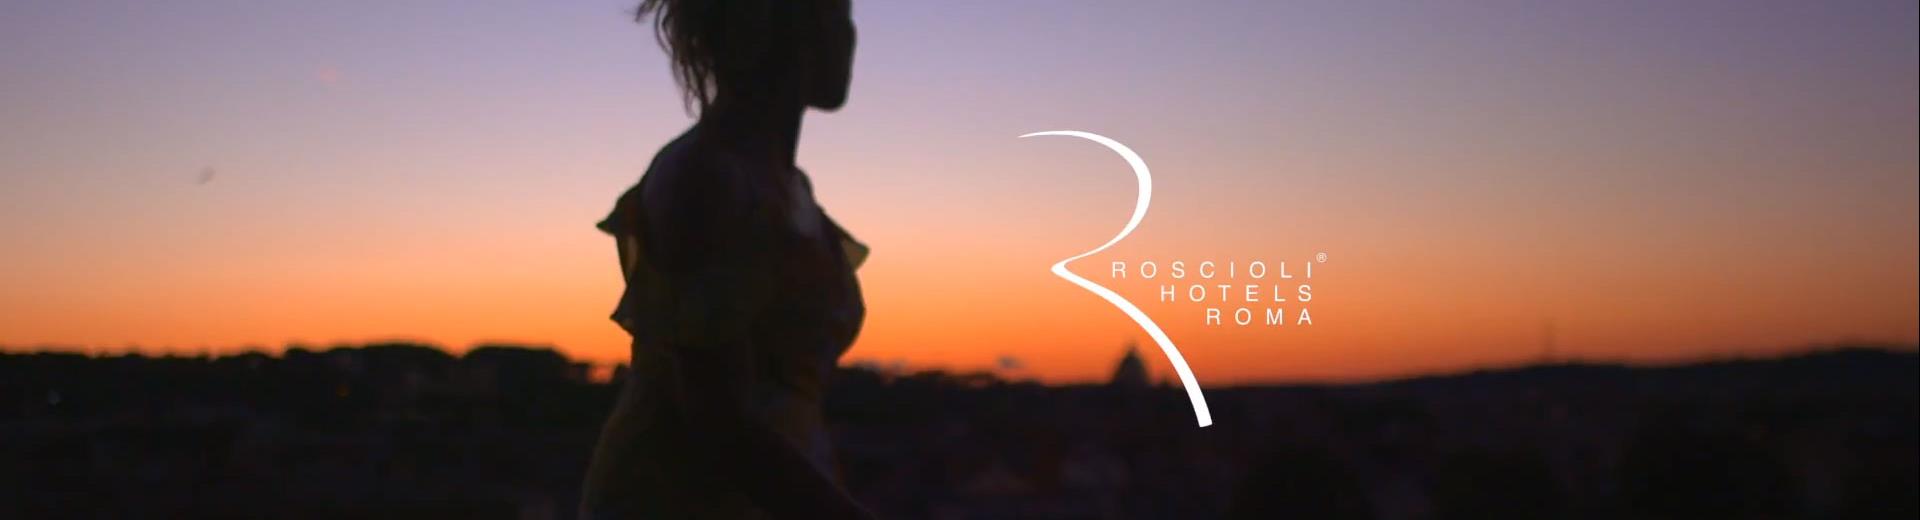 Roscioli Hotels Roma